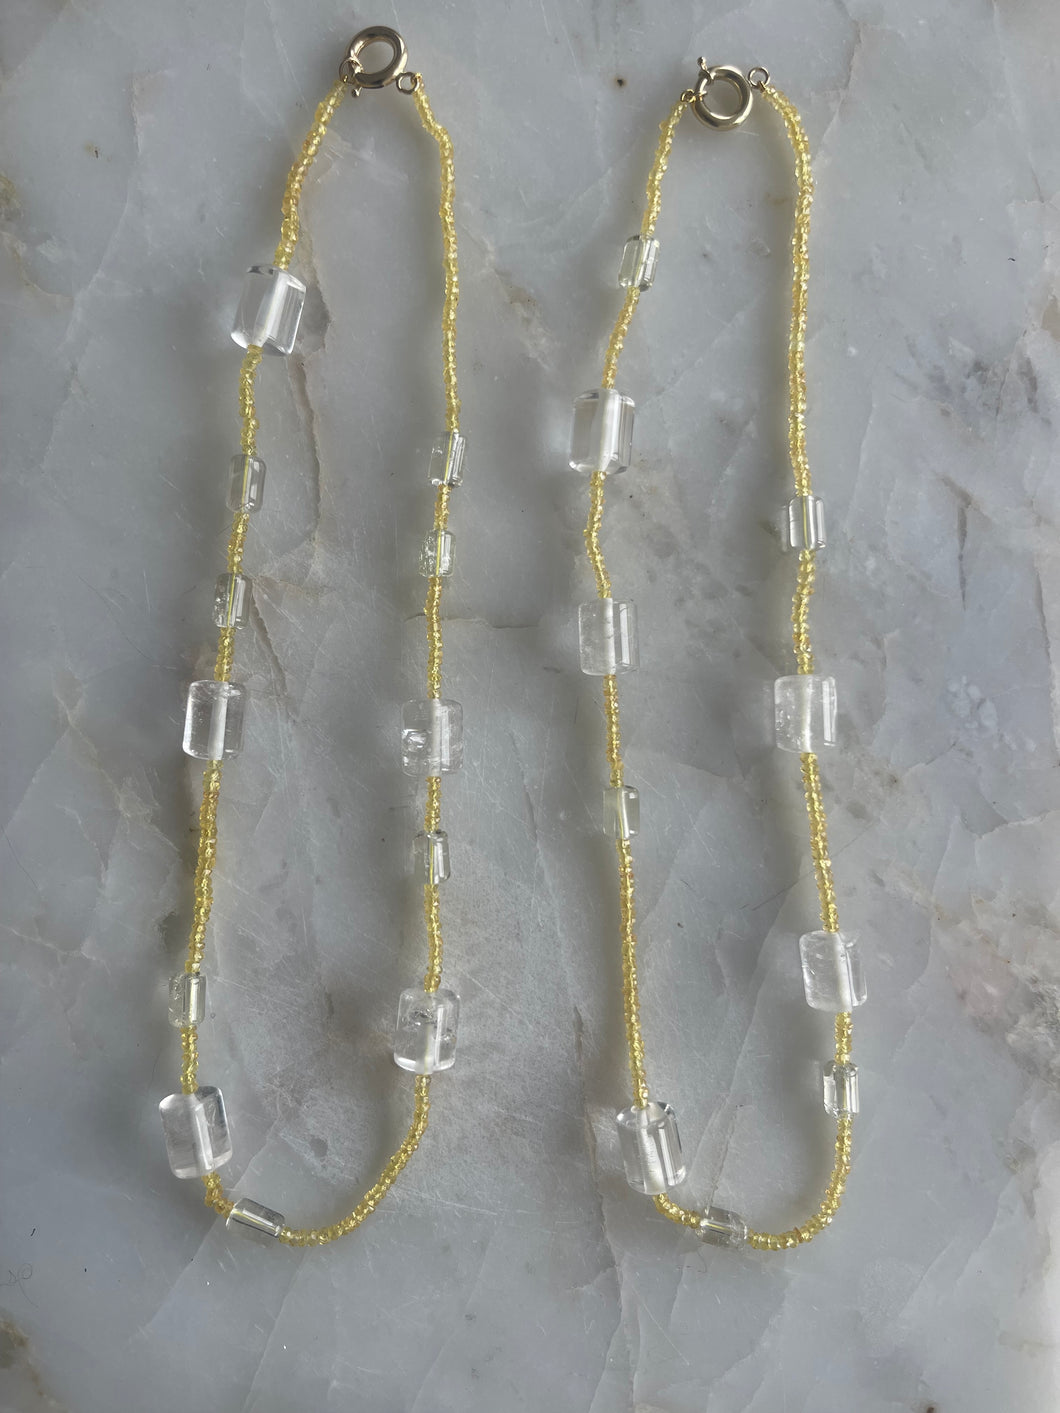 The Lemon Sugar Crystal necklace